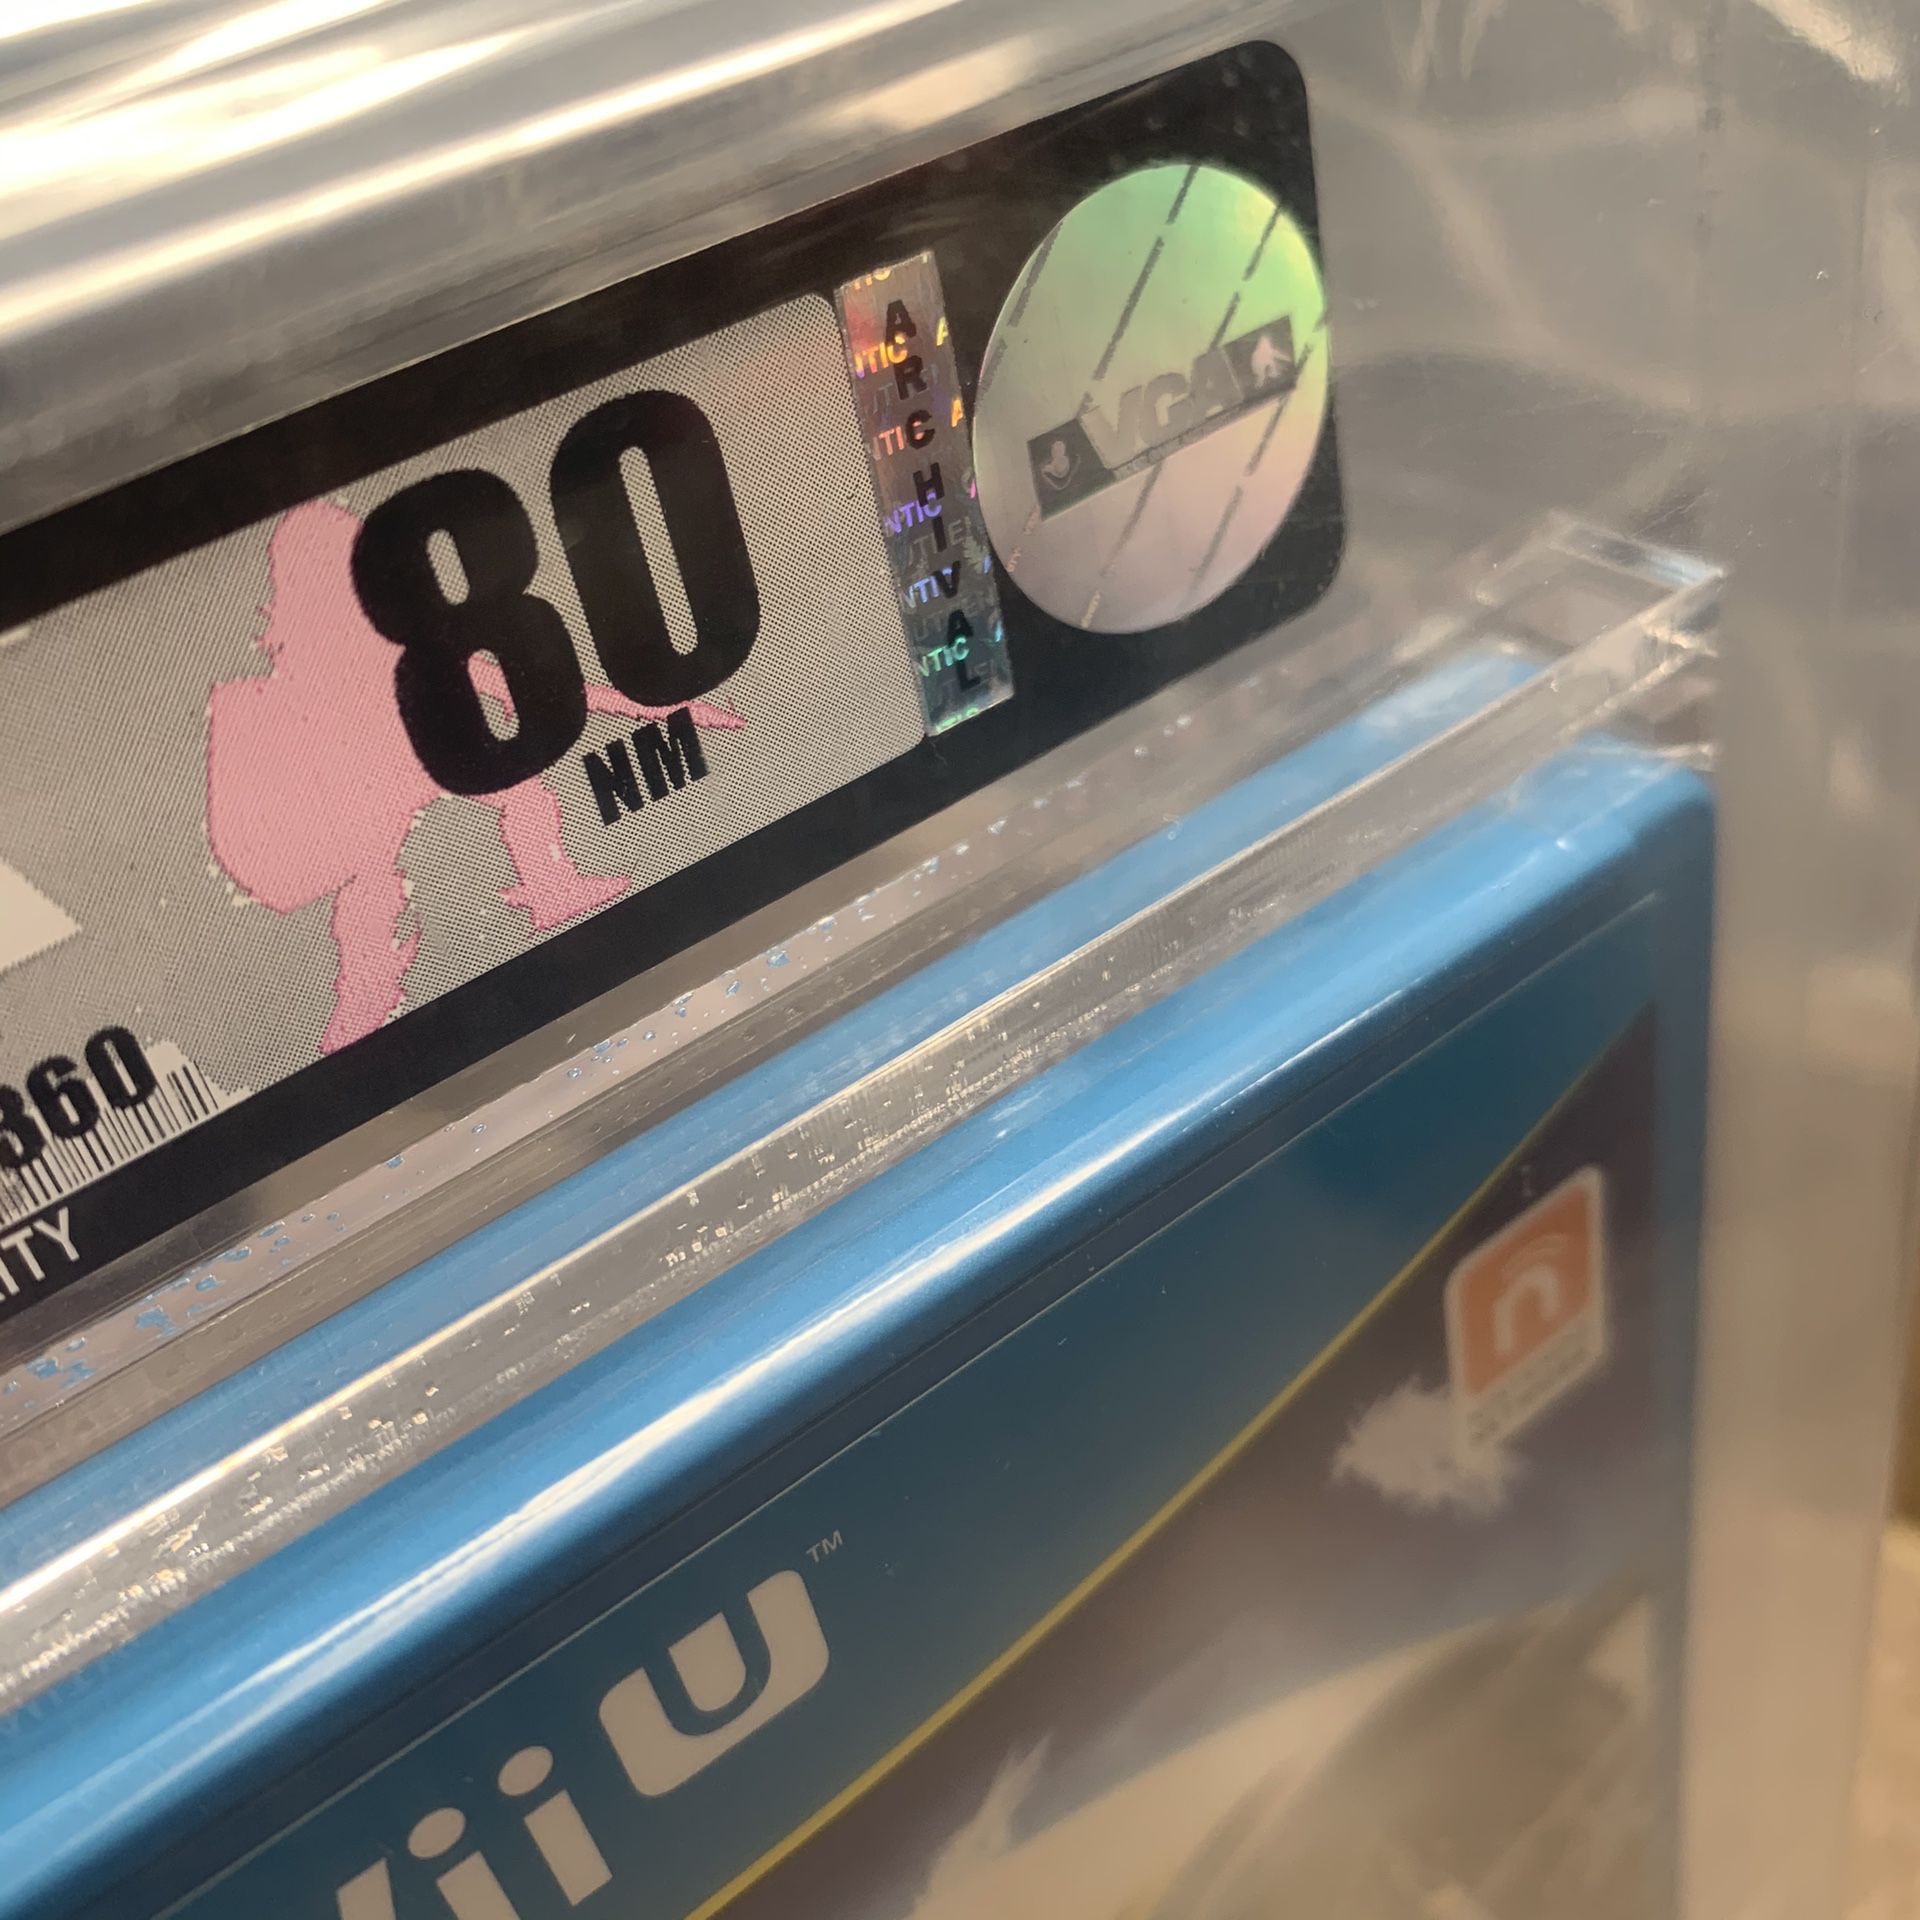 Bayonetta 2 - Nintendo Wii U, 2016 - VGA 80 NM Archival UV+ Silver Badge